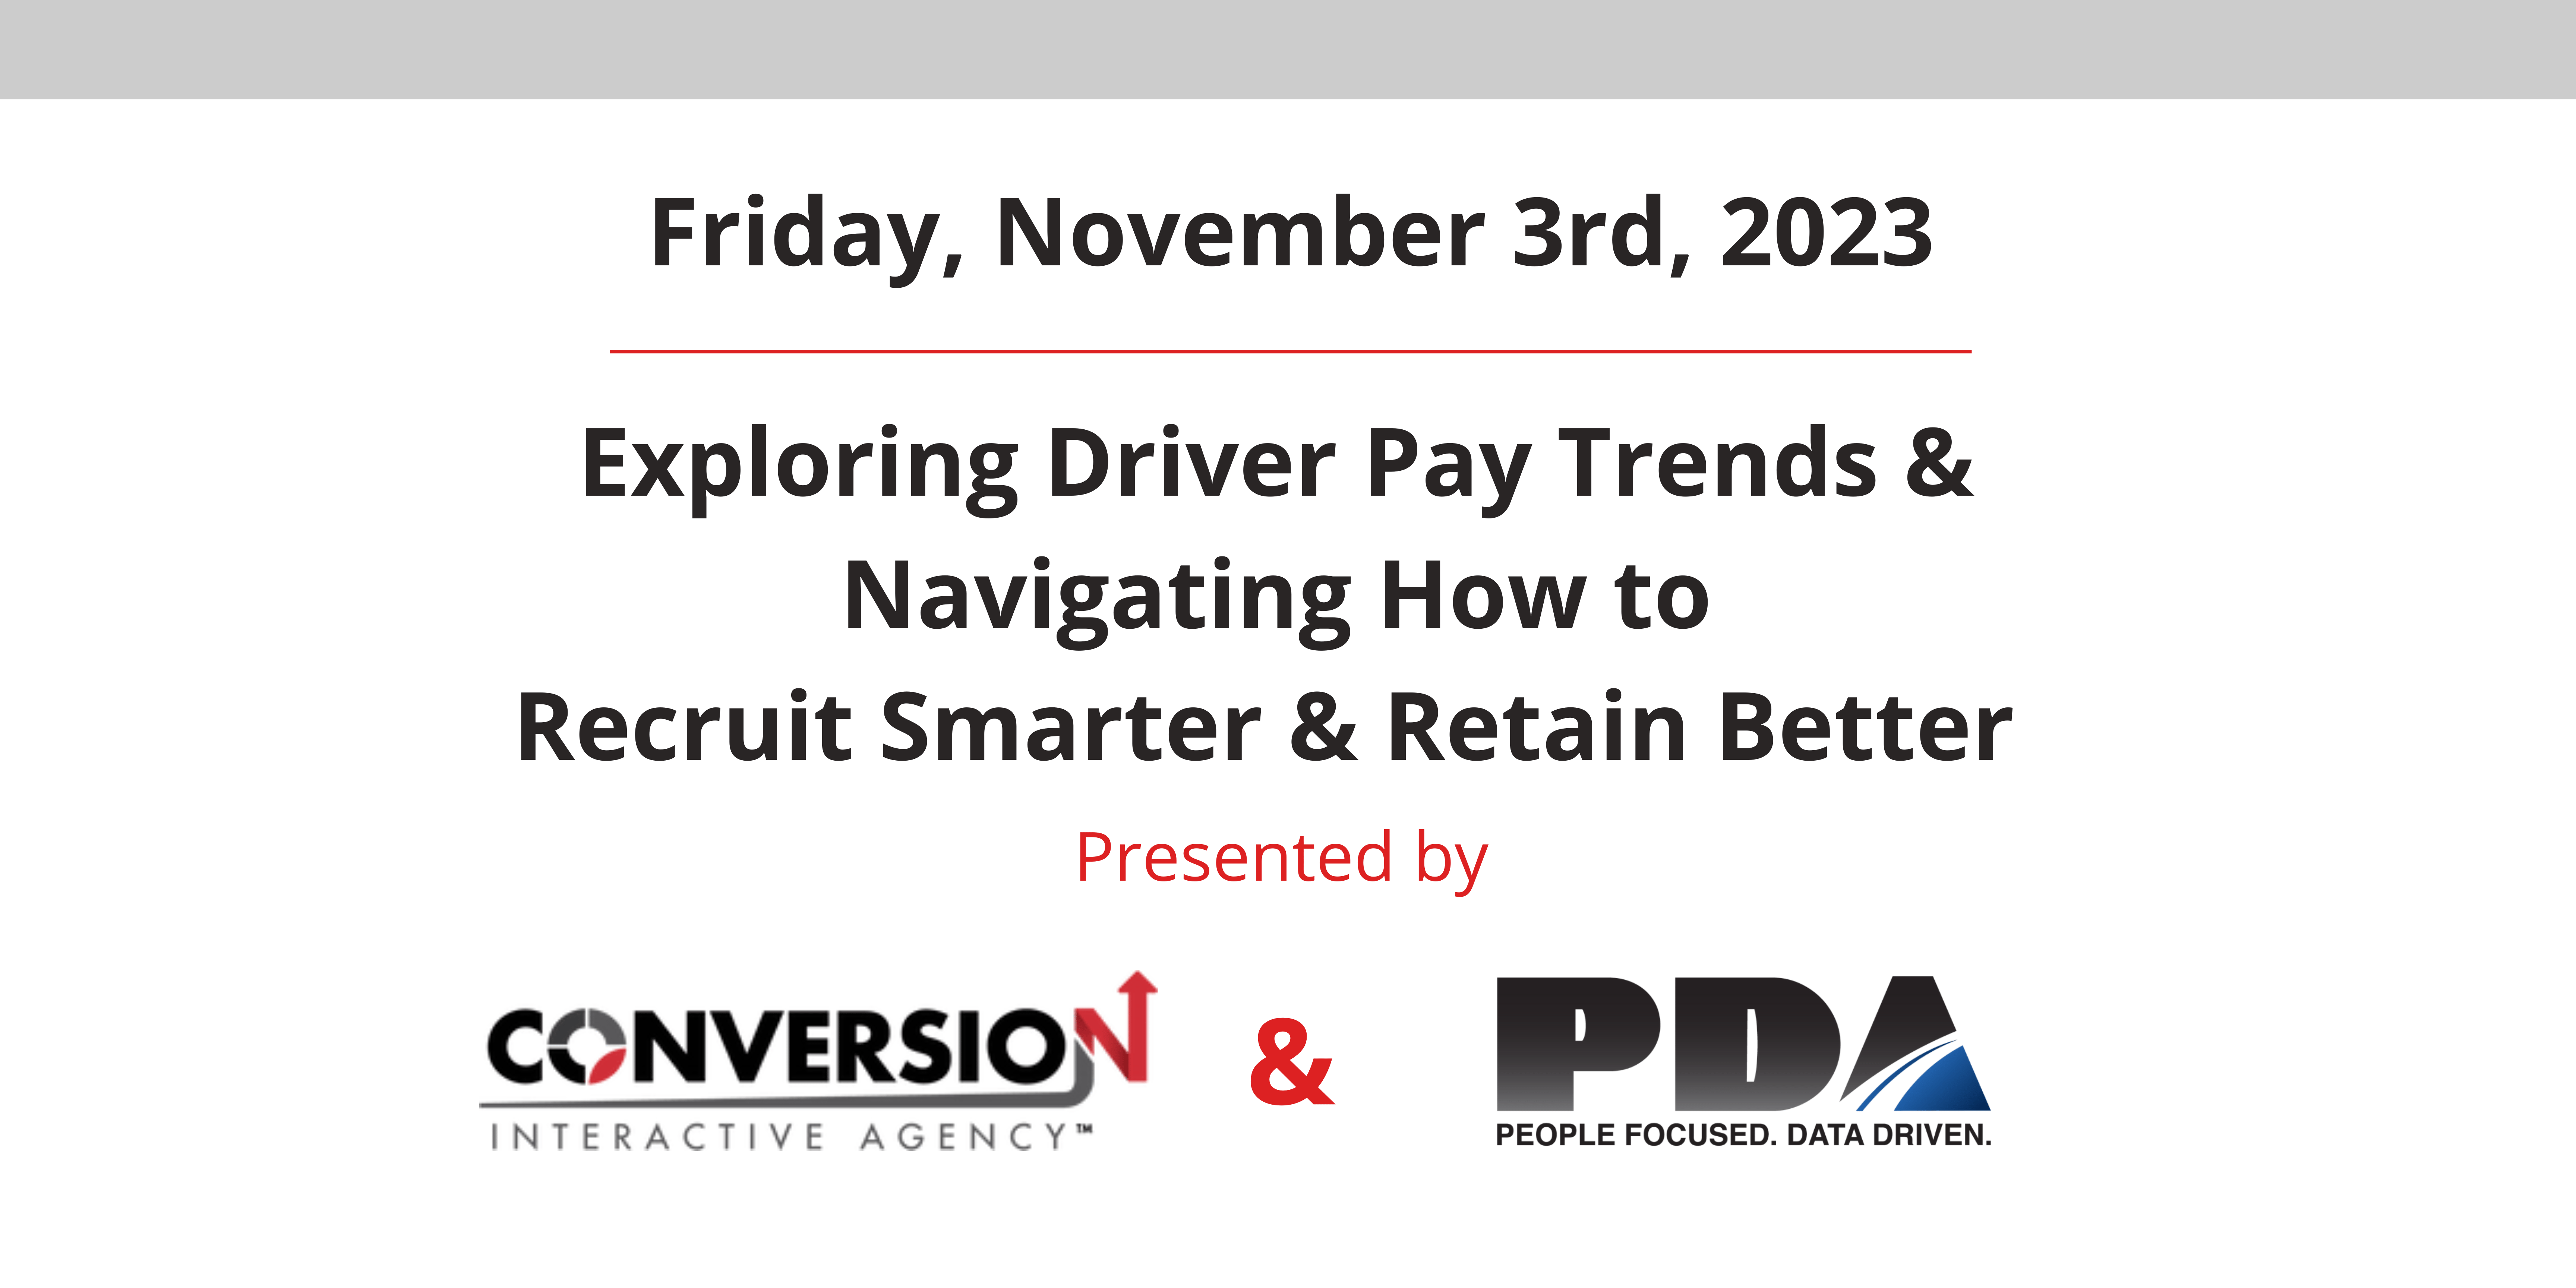 Fundamental Seminar: “Exploring Driver Pay Trends & Navigating How to Recruit Smarter & Retain Better”